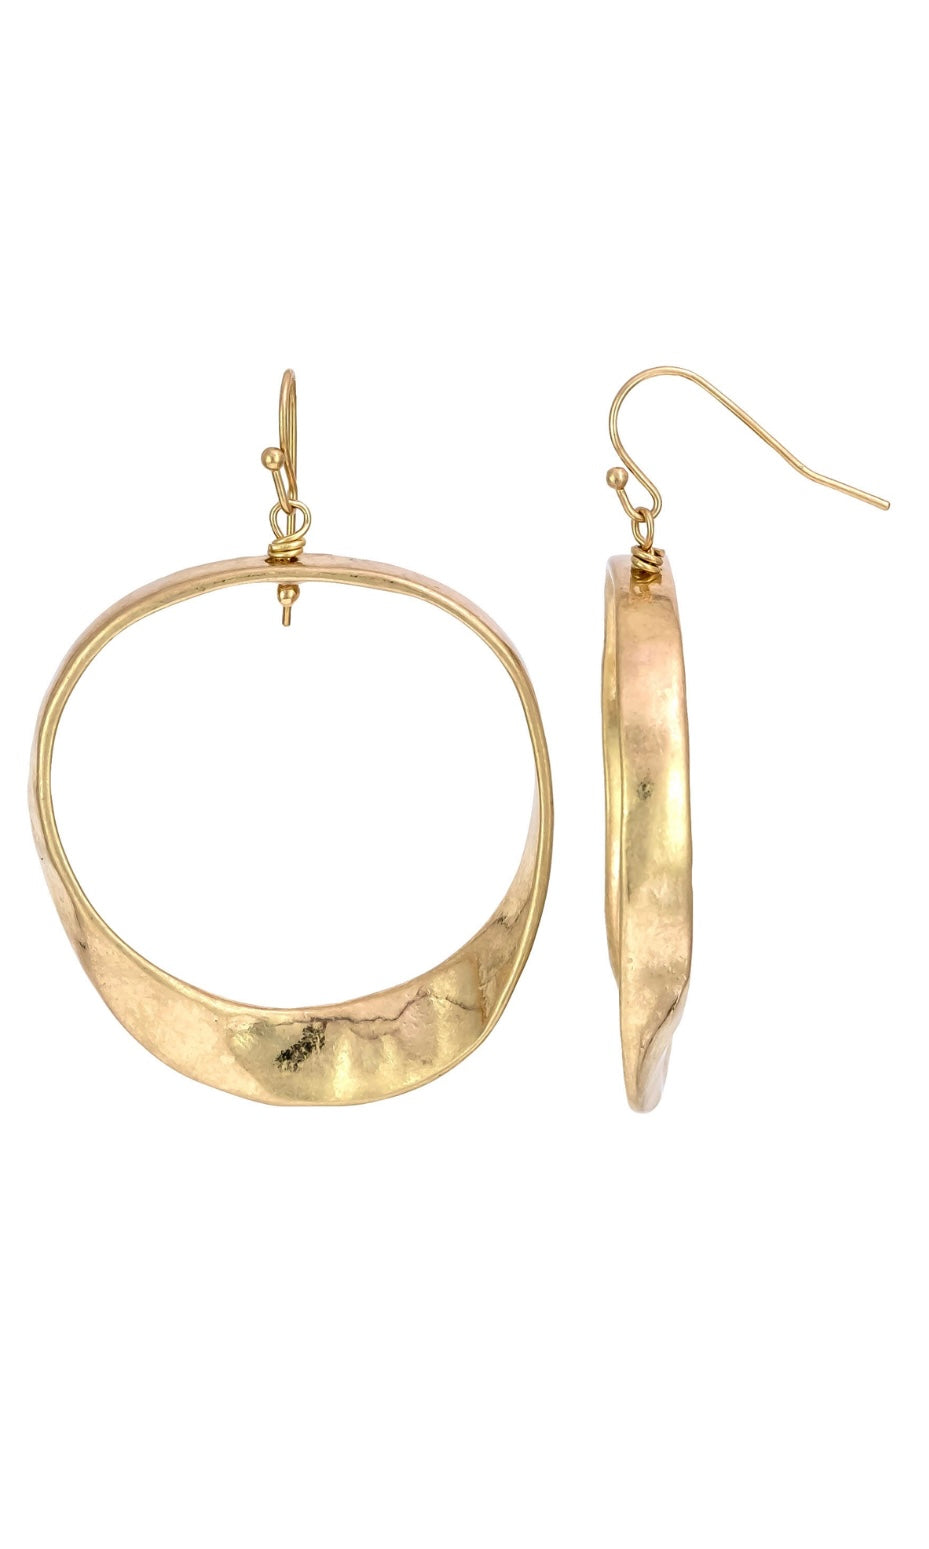 Earring Hammered Gold Twisted Hoop Drop Earrings